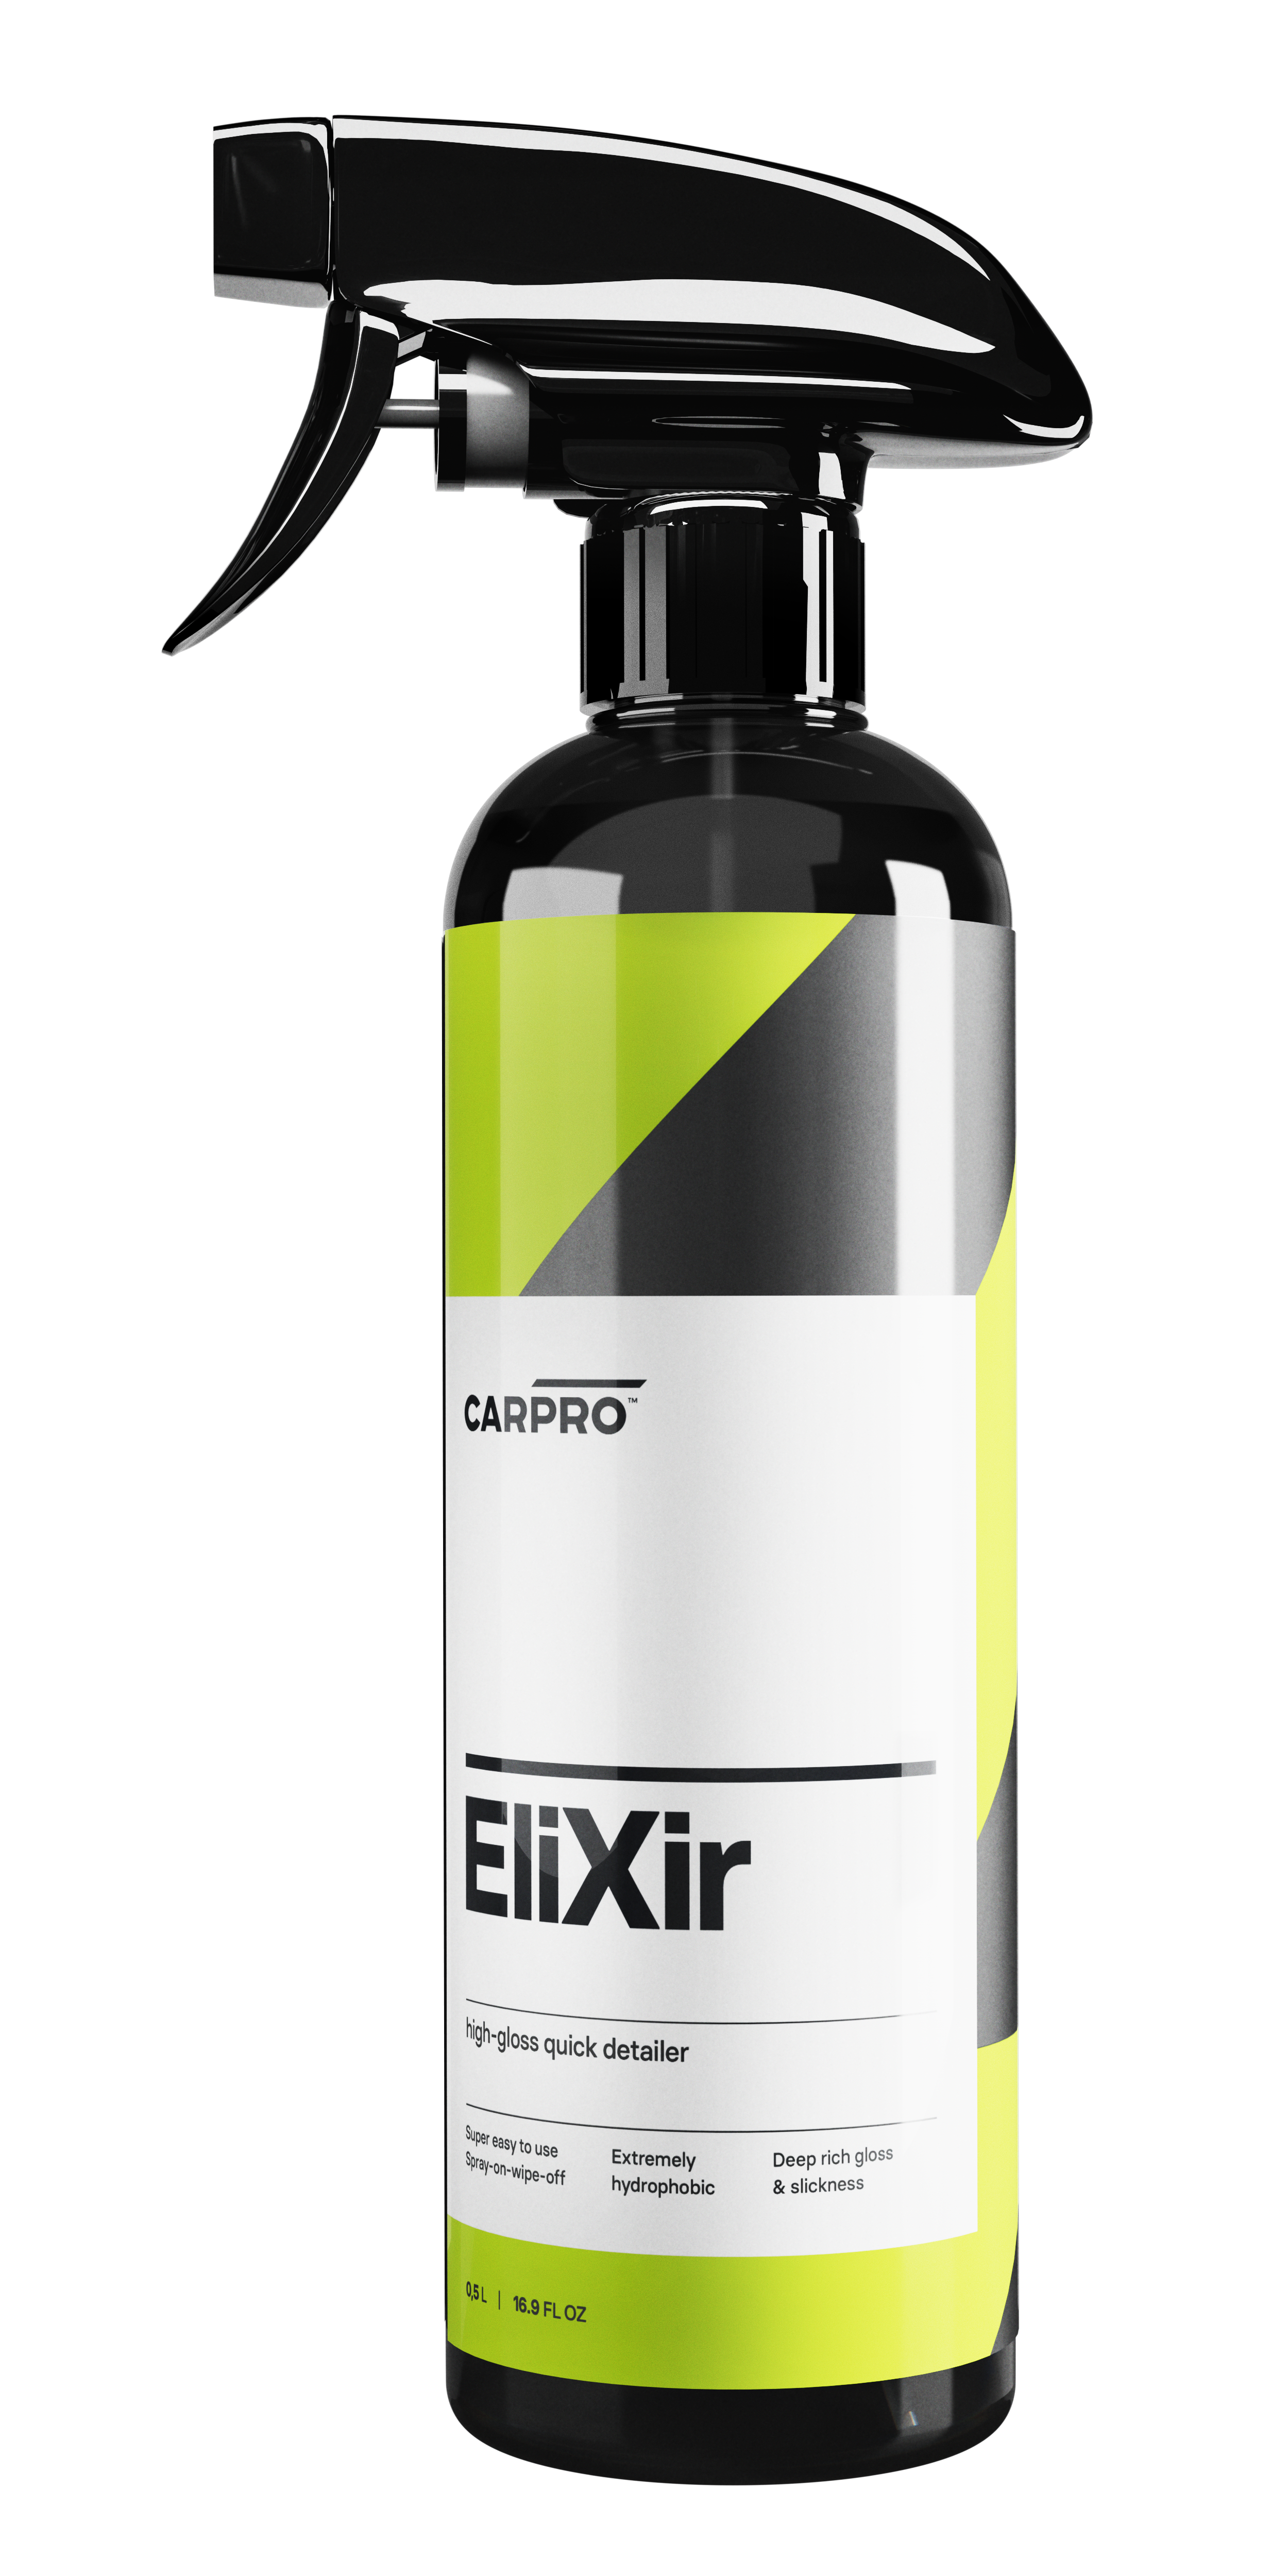 CARPRO EliXir 500mL - SiO2 quick detailer